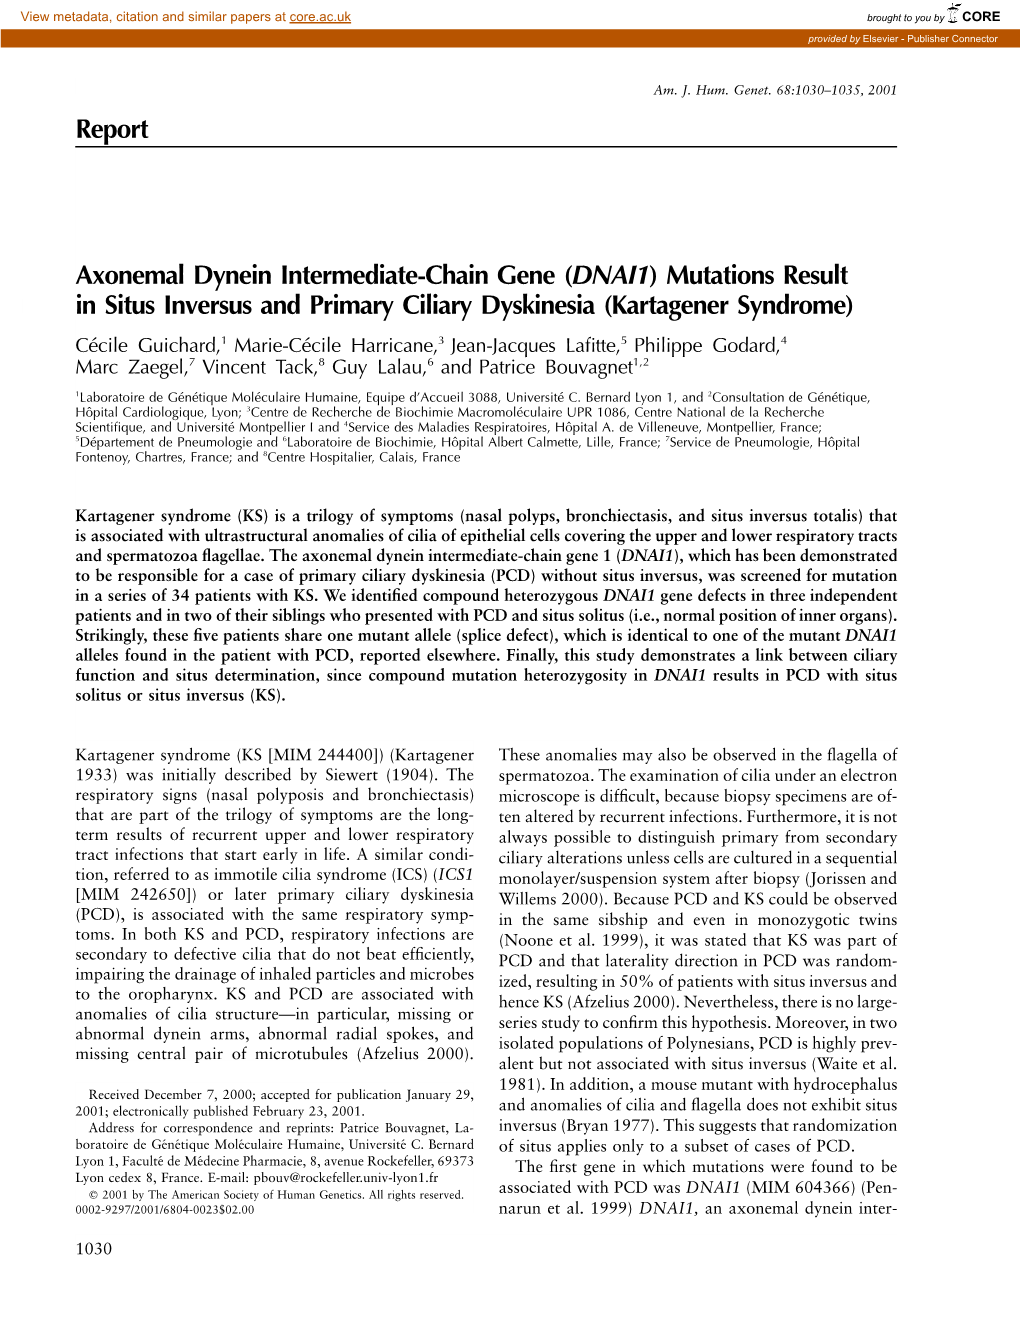 Report Axonemal Dynein Intermediate-Chain Gene (DNAI1)